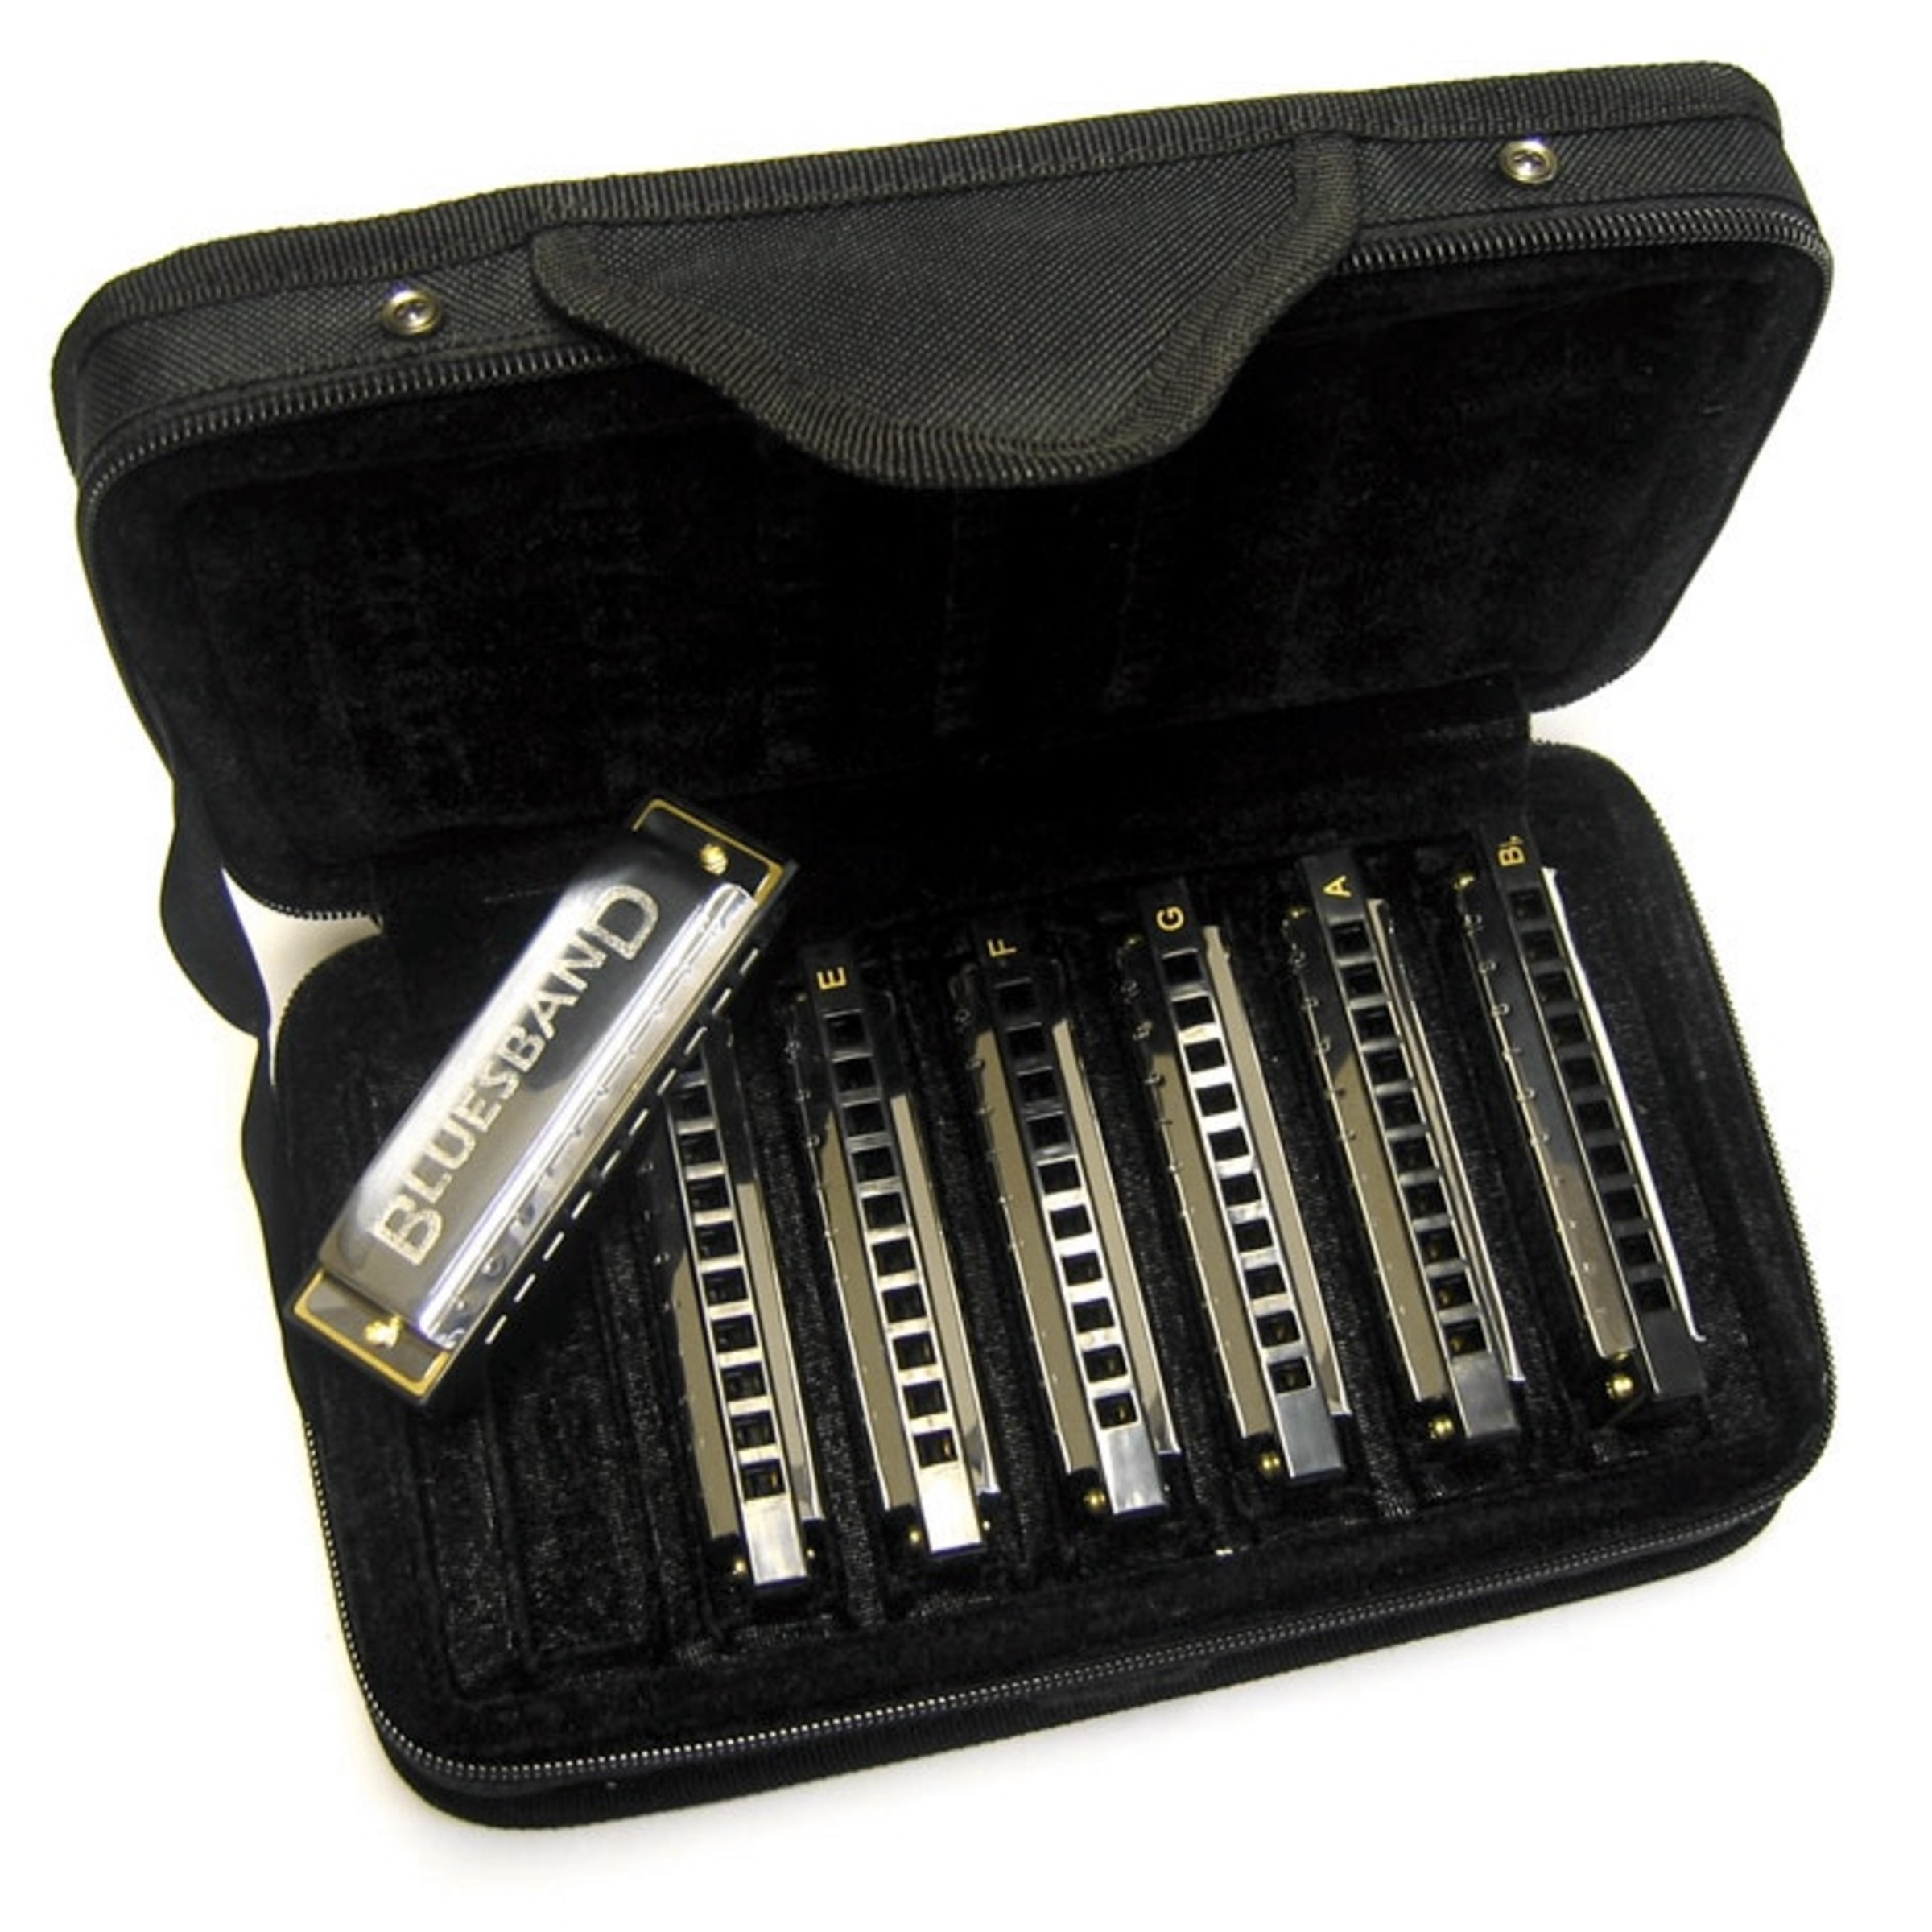 Hohner harmonica set